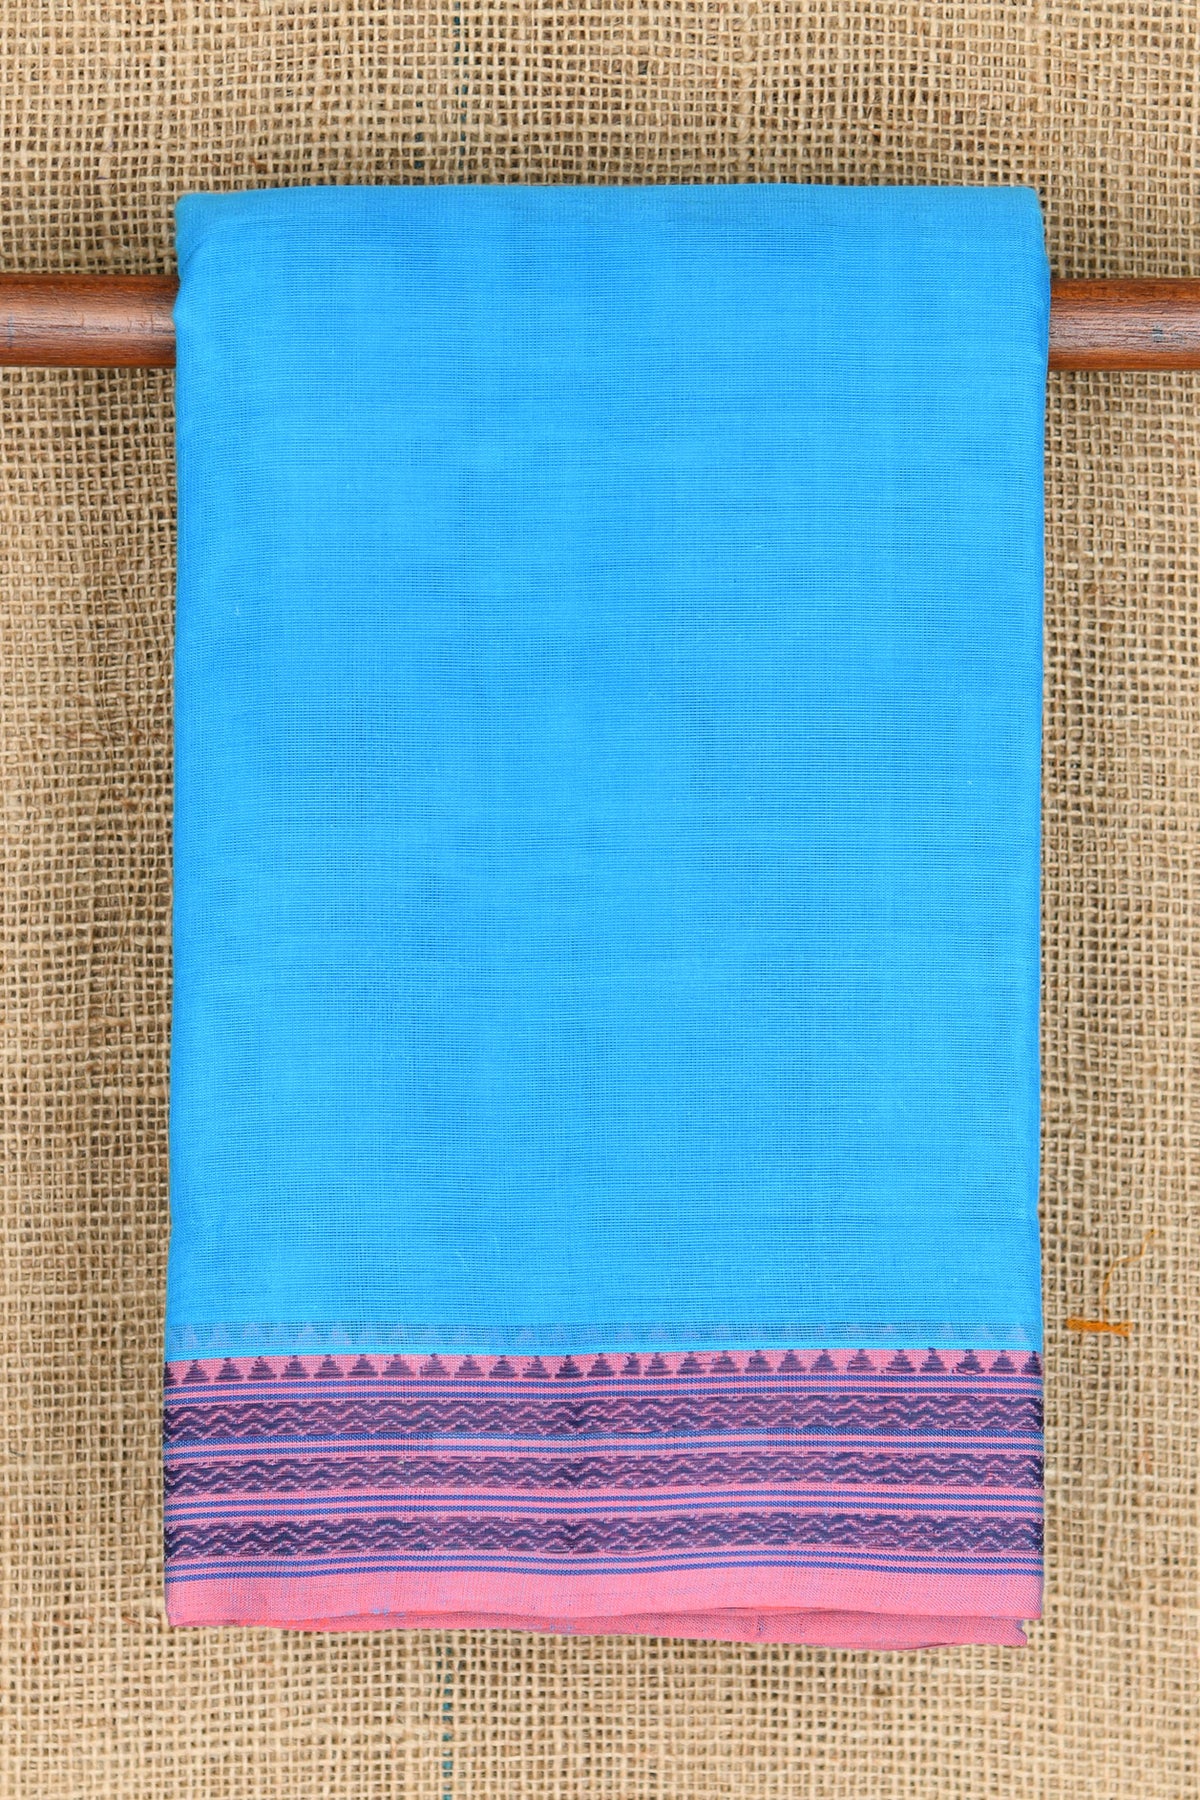 Thread Work Border In Plain Ramar Blue Kanchi Cotton Saree